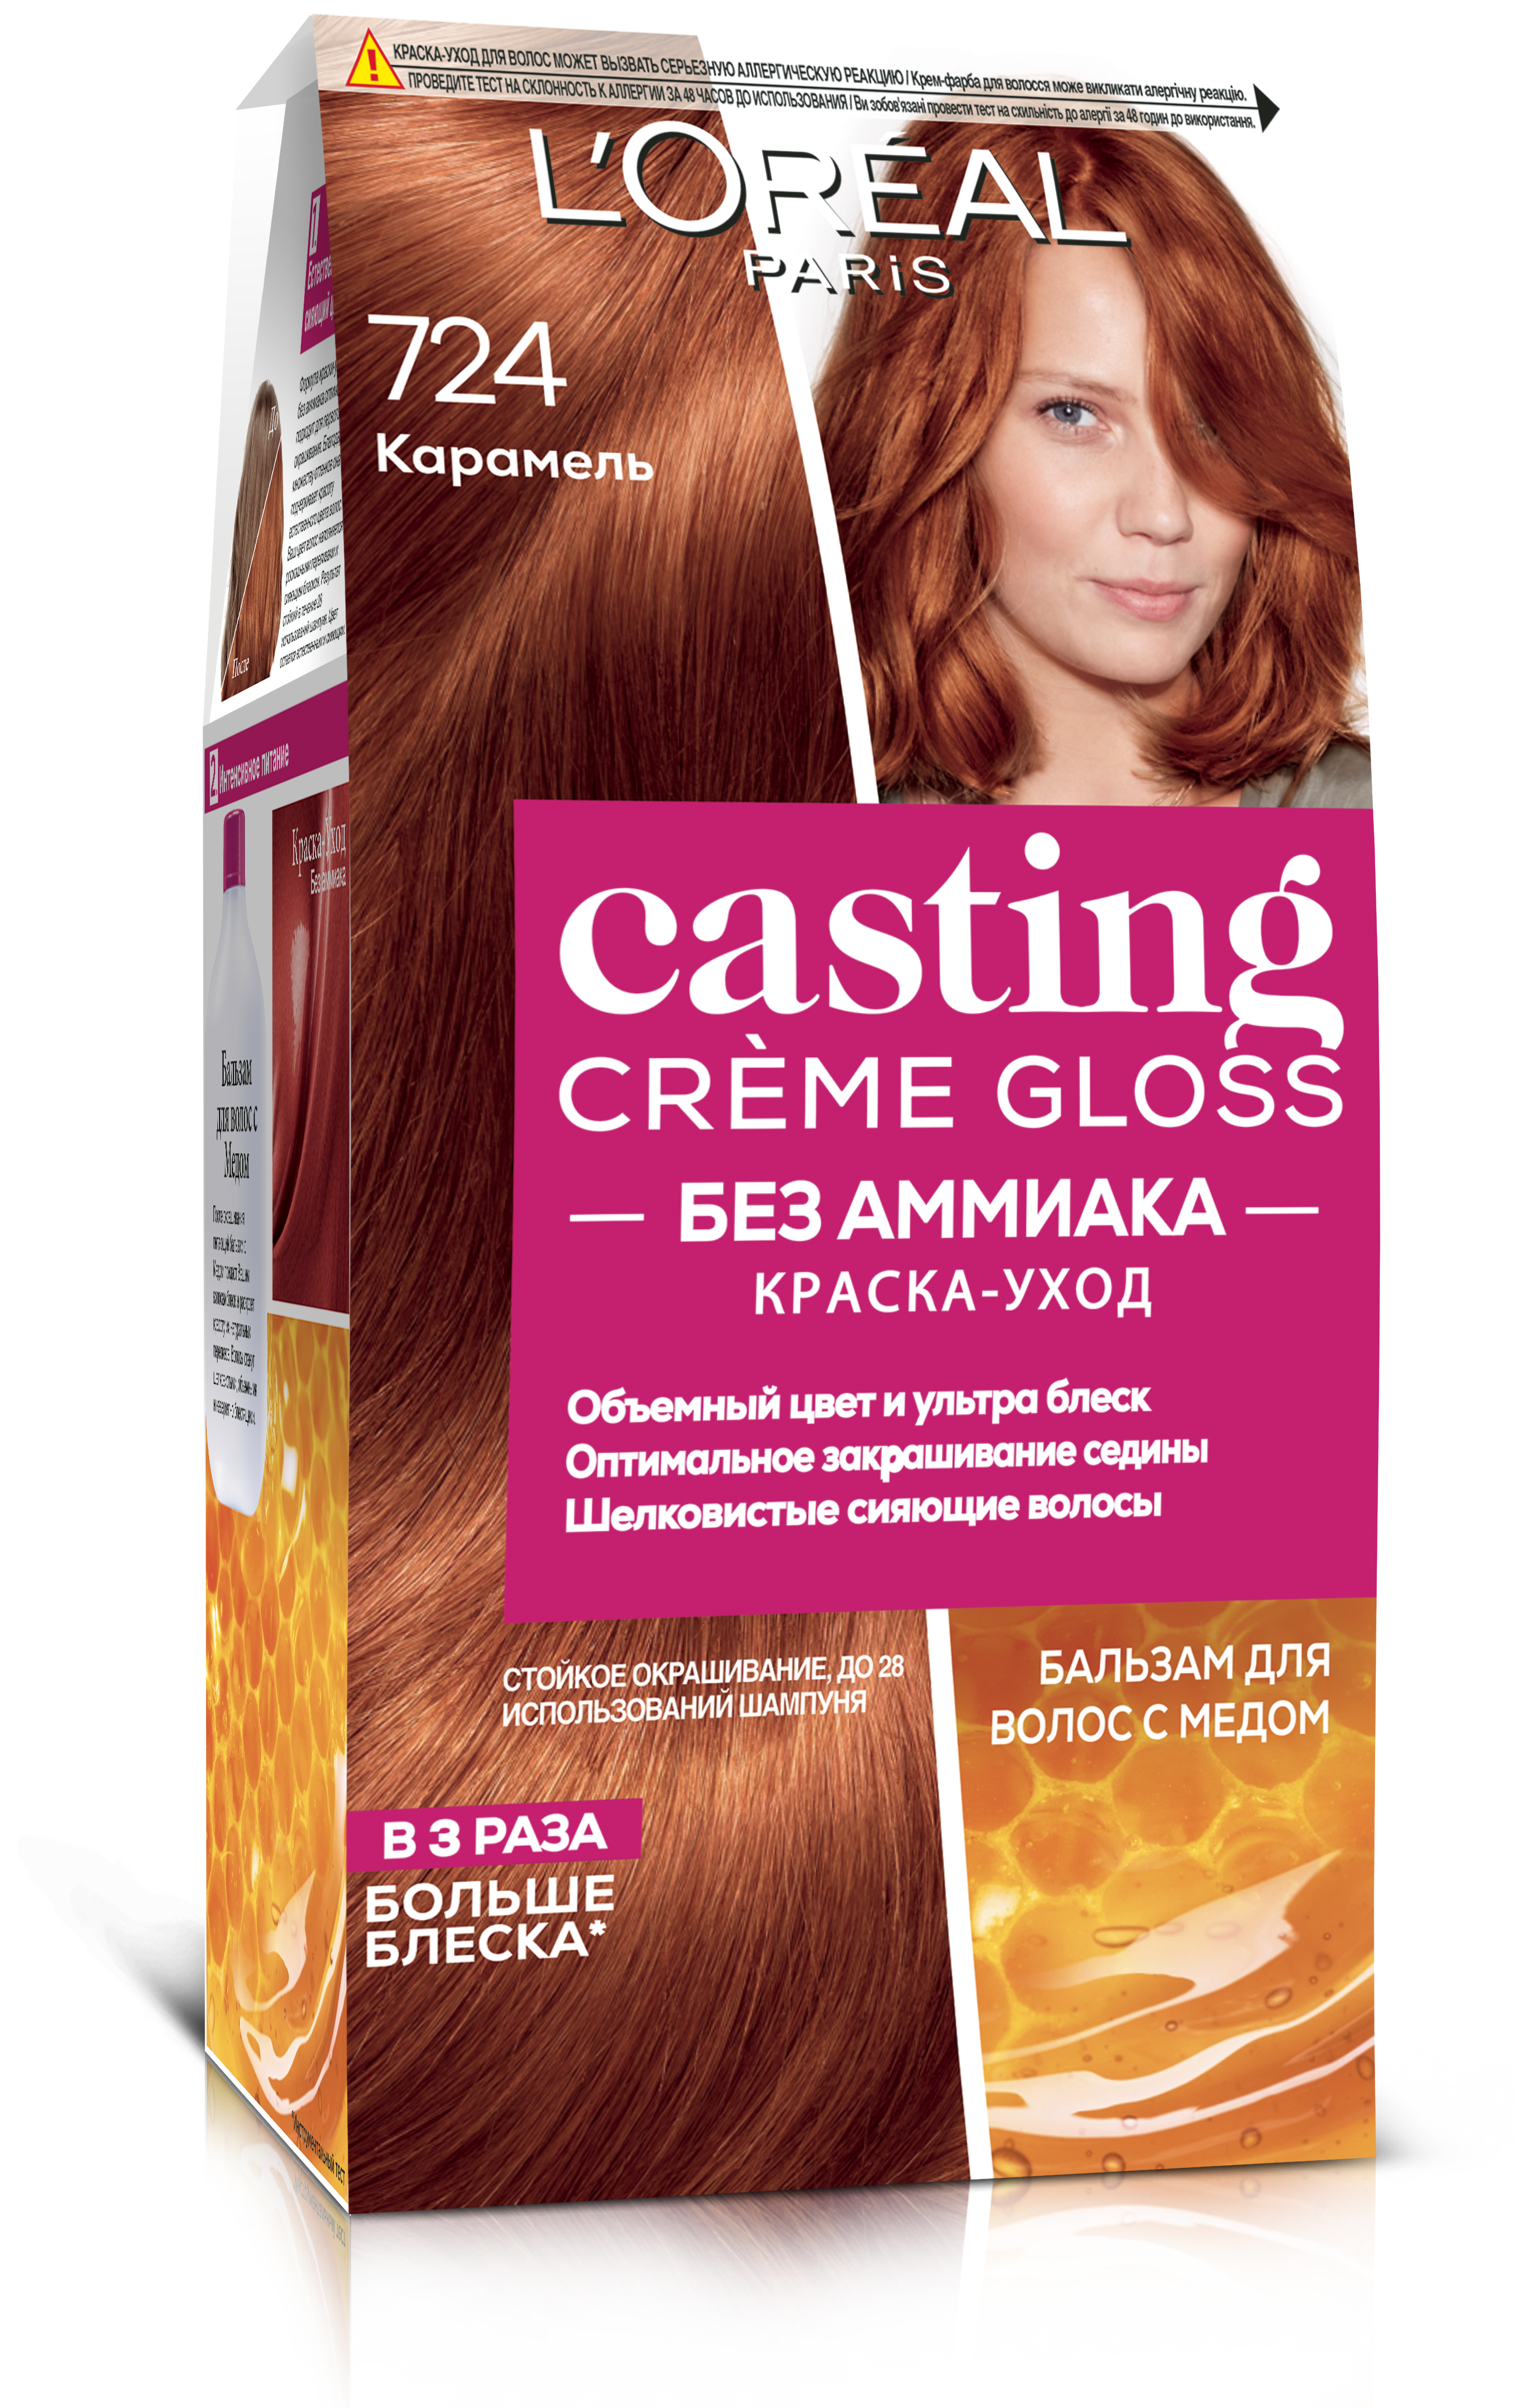 Краска-уход для волос без аммиака L'Oreal Paris Casting Creme Gloss, тон 724 (Карамель), 120 мл (A5775378) - фото 1